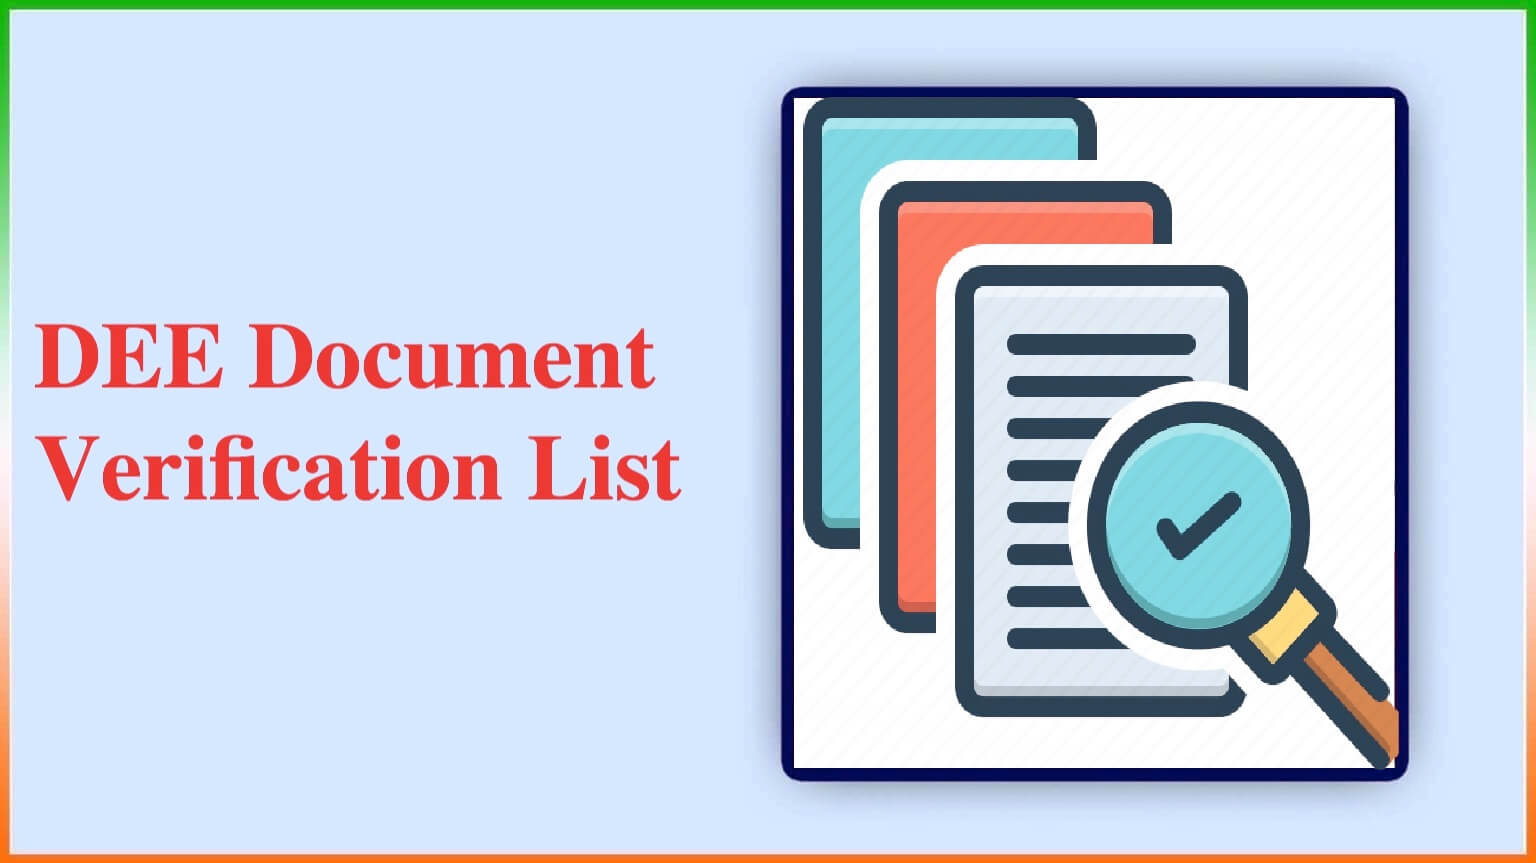 Dee Document Verification List